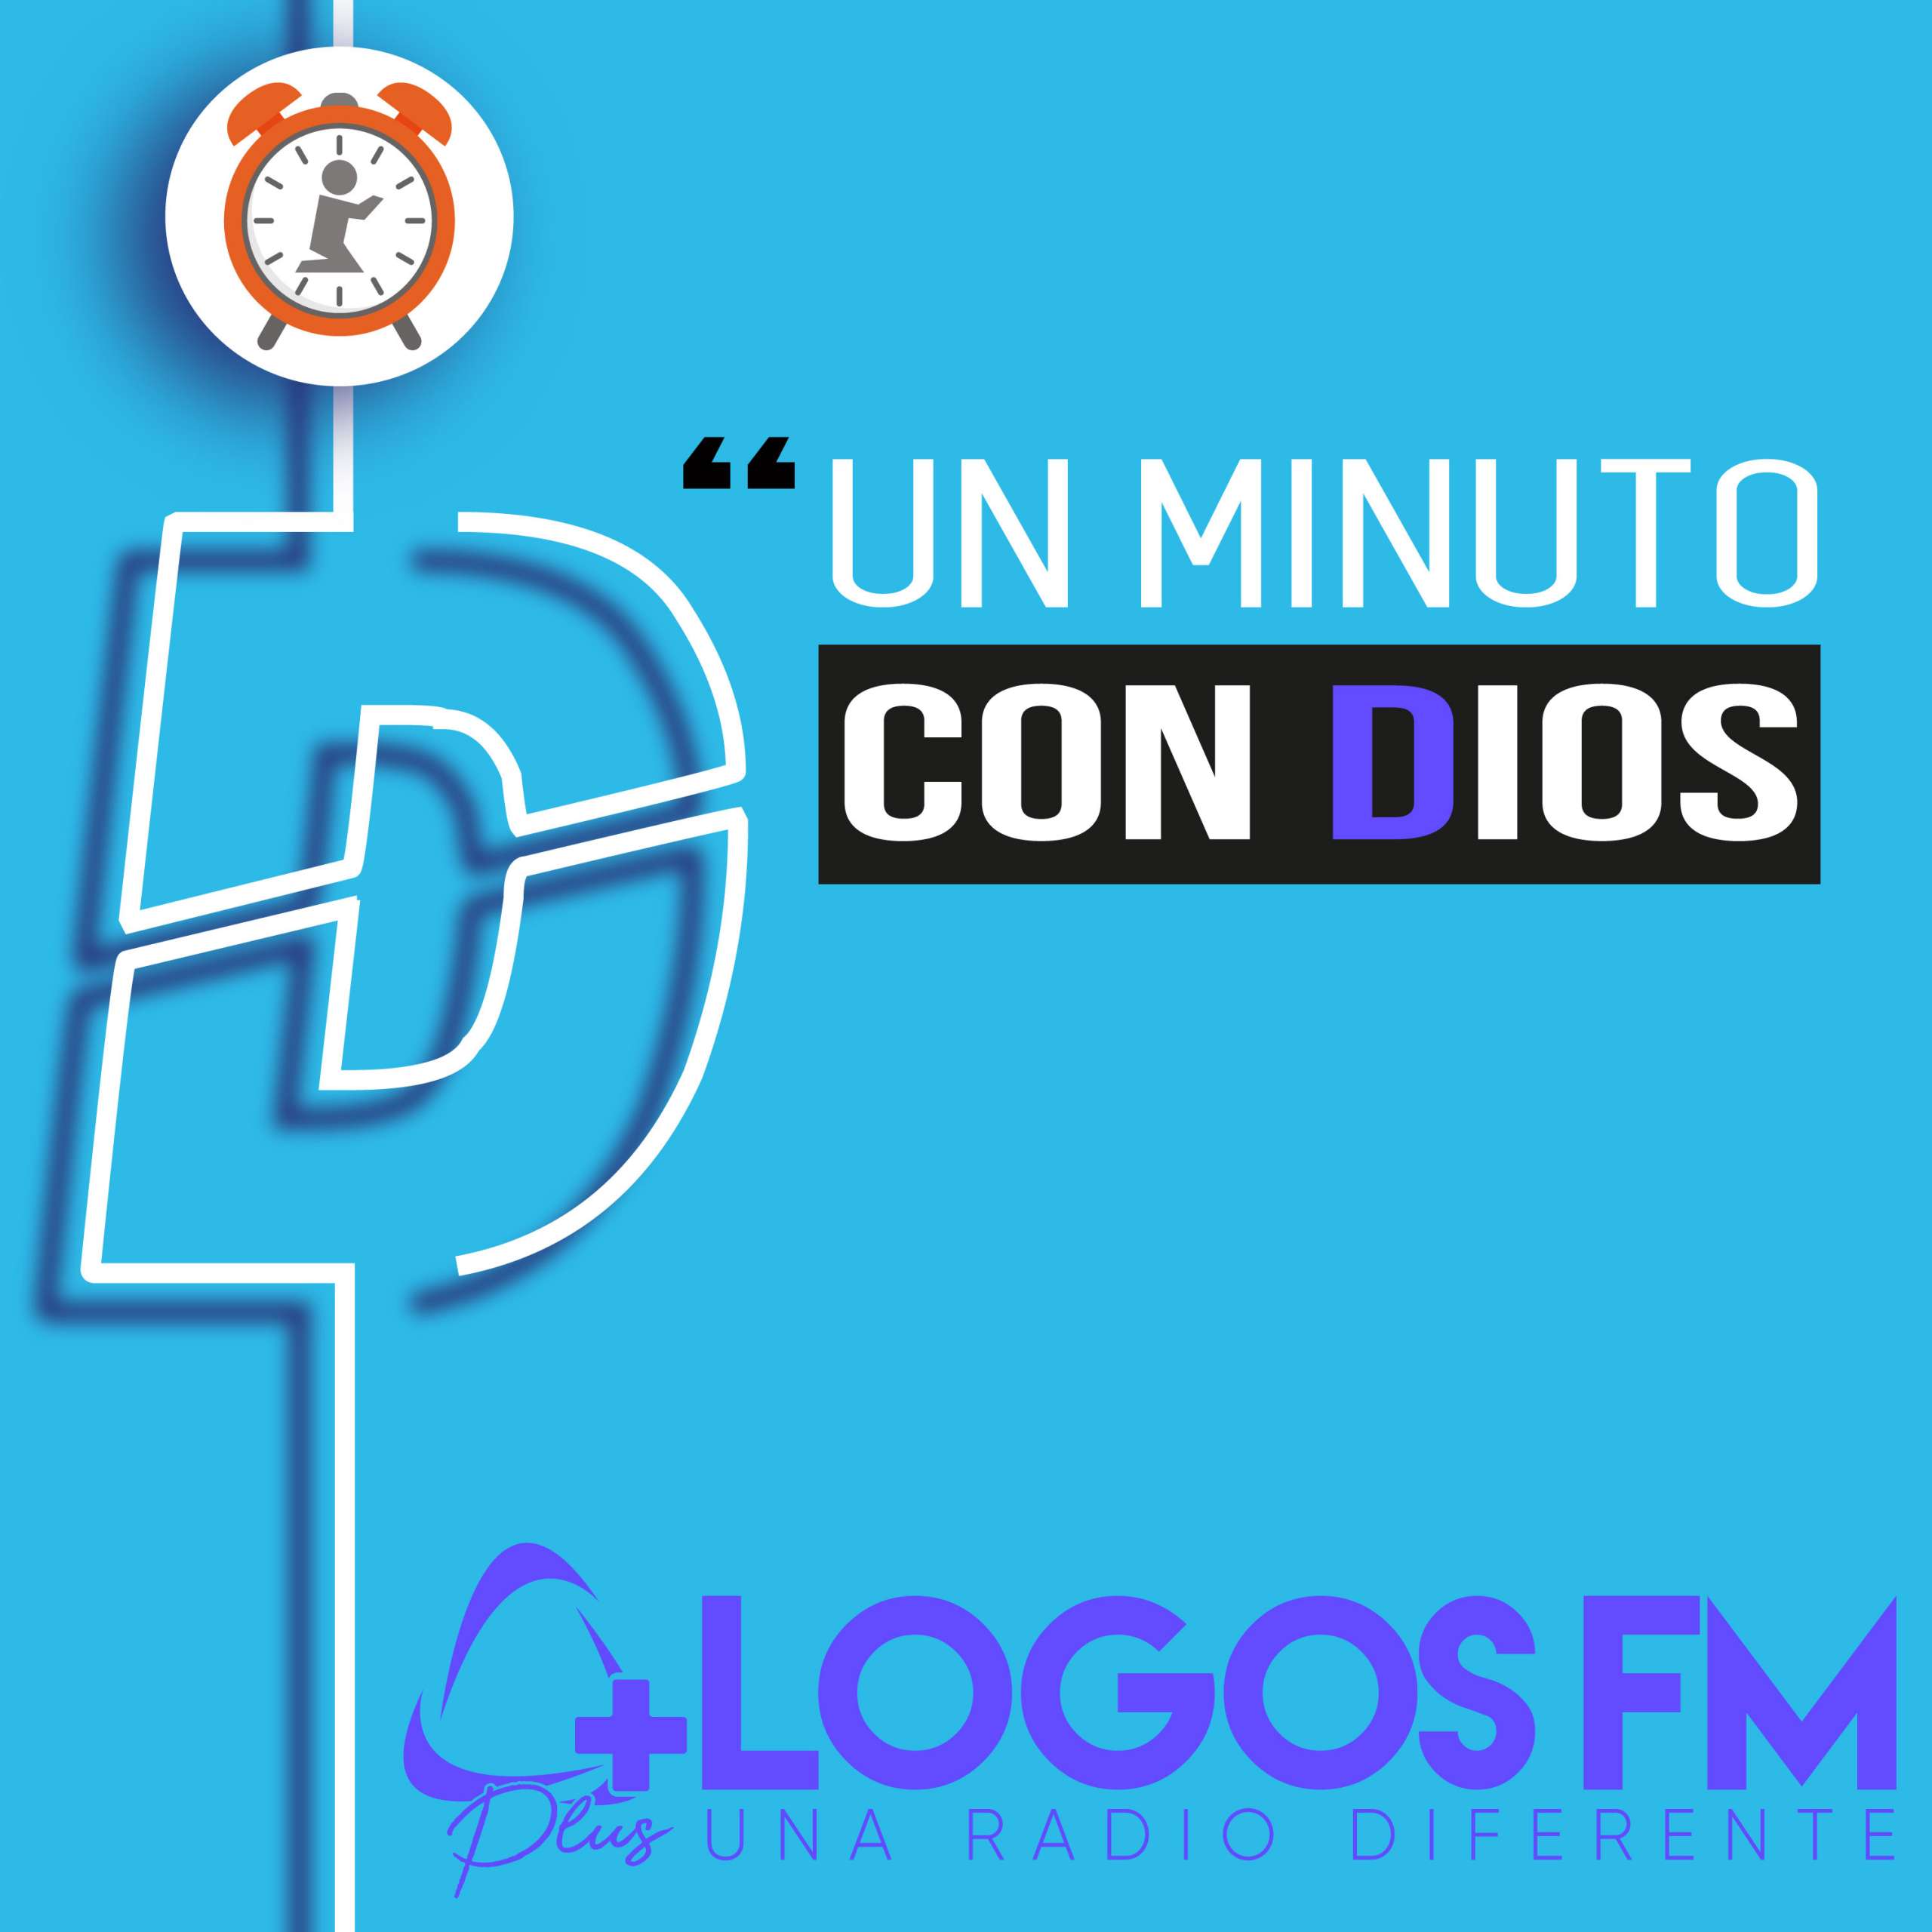 Un minuto con Dios - Episodio 369 - Juan José Ordoñez